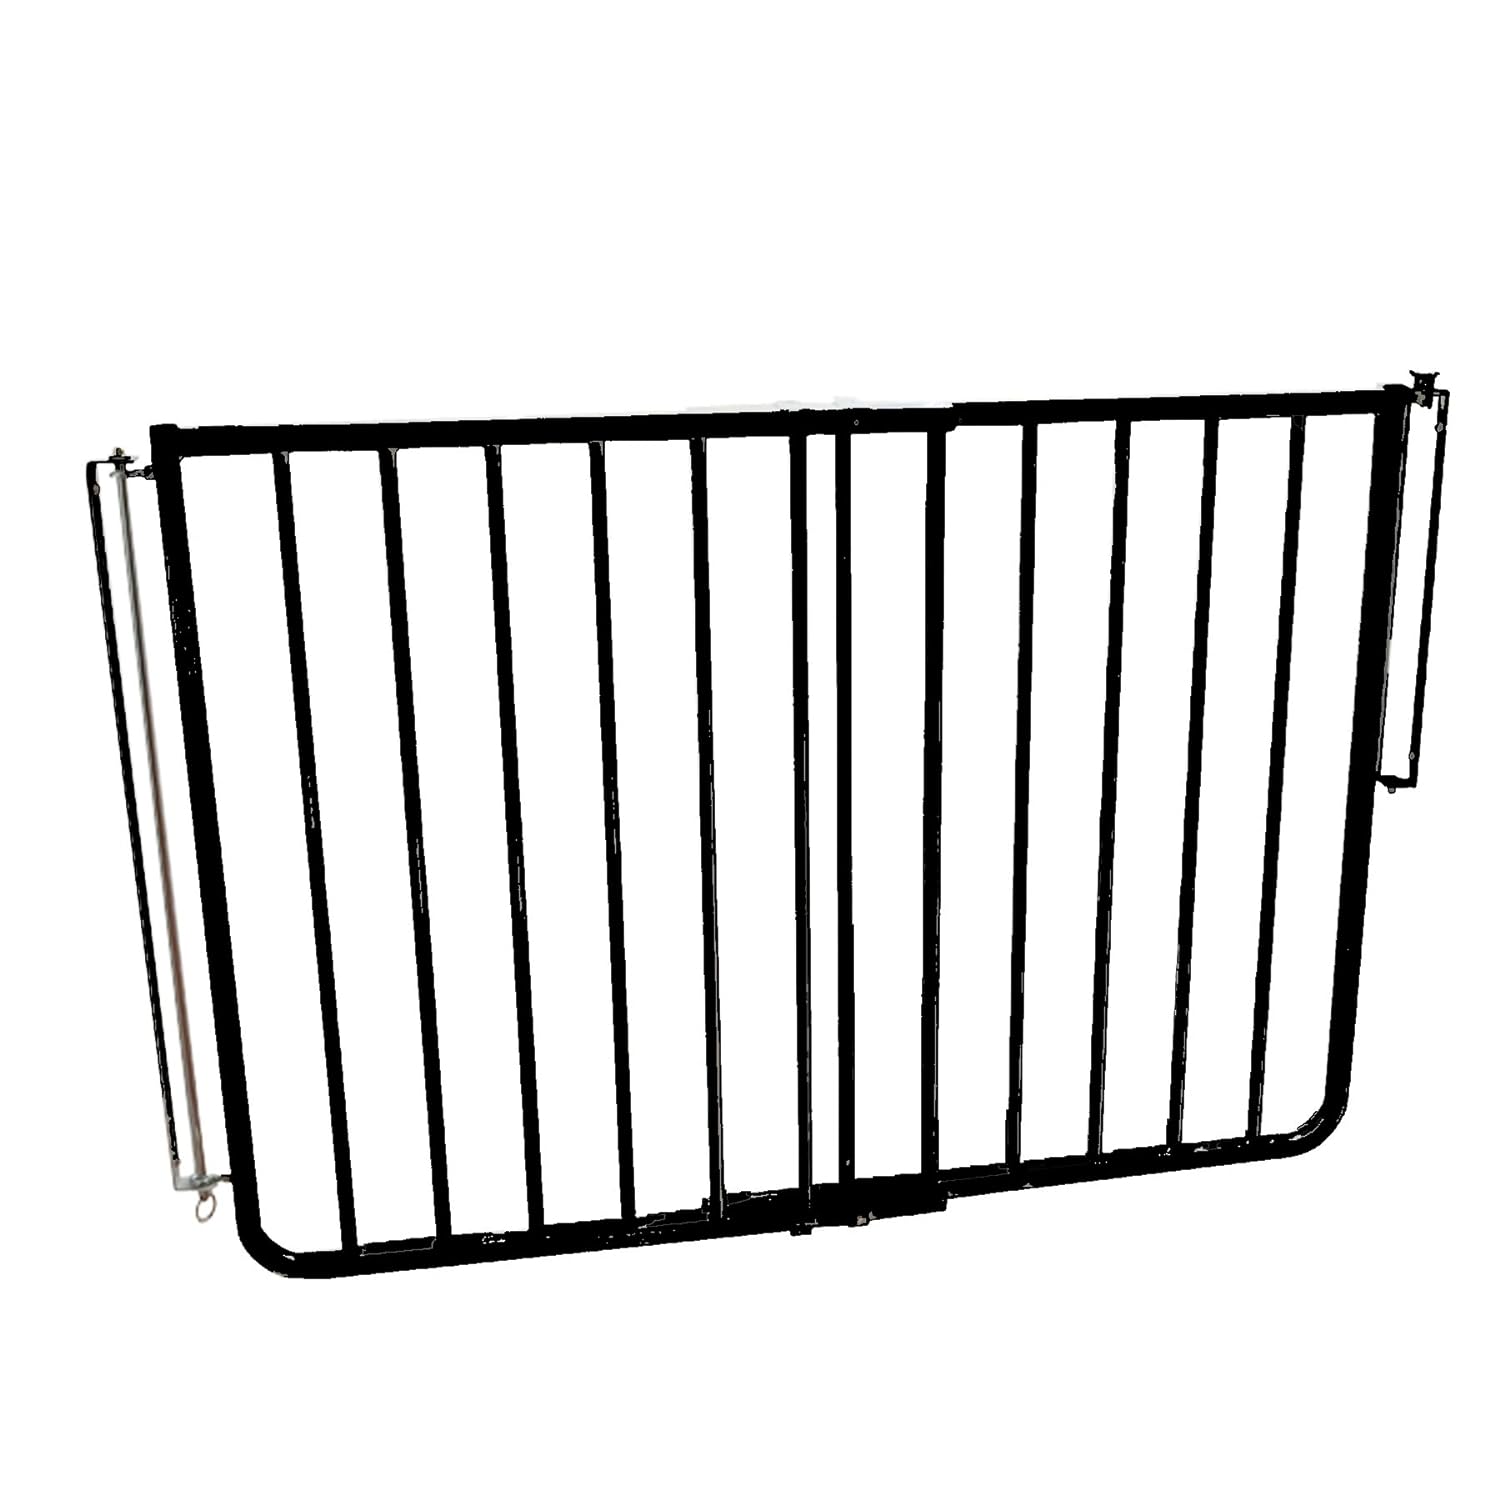 Cardinal Gates Outdoor Safety Gate, Black - image 1 of 4